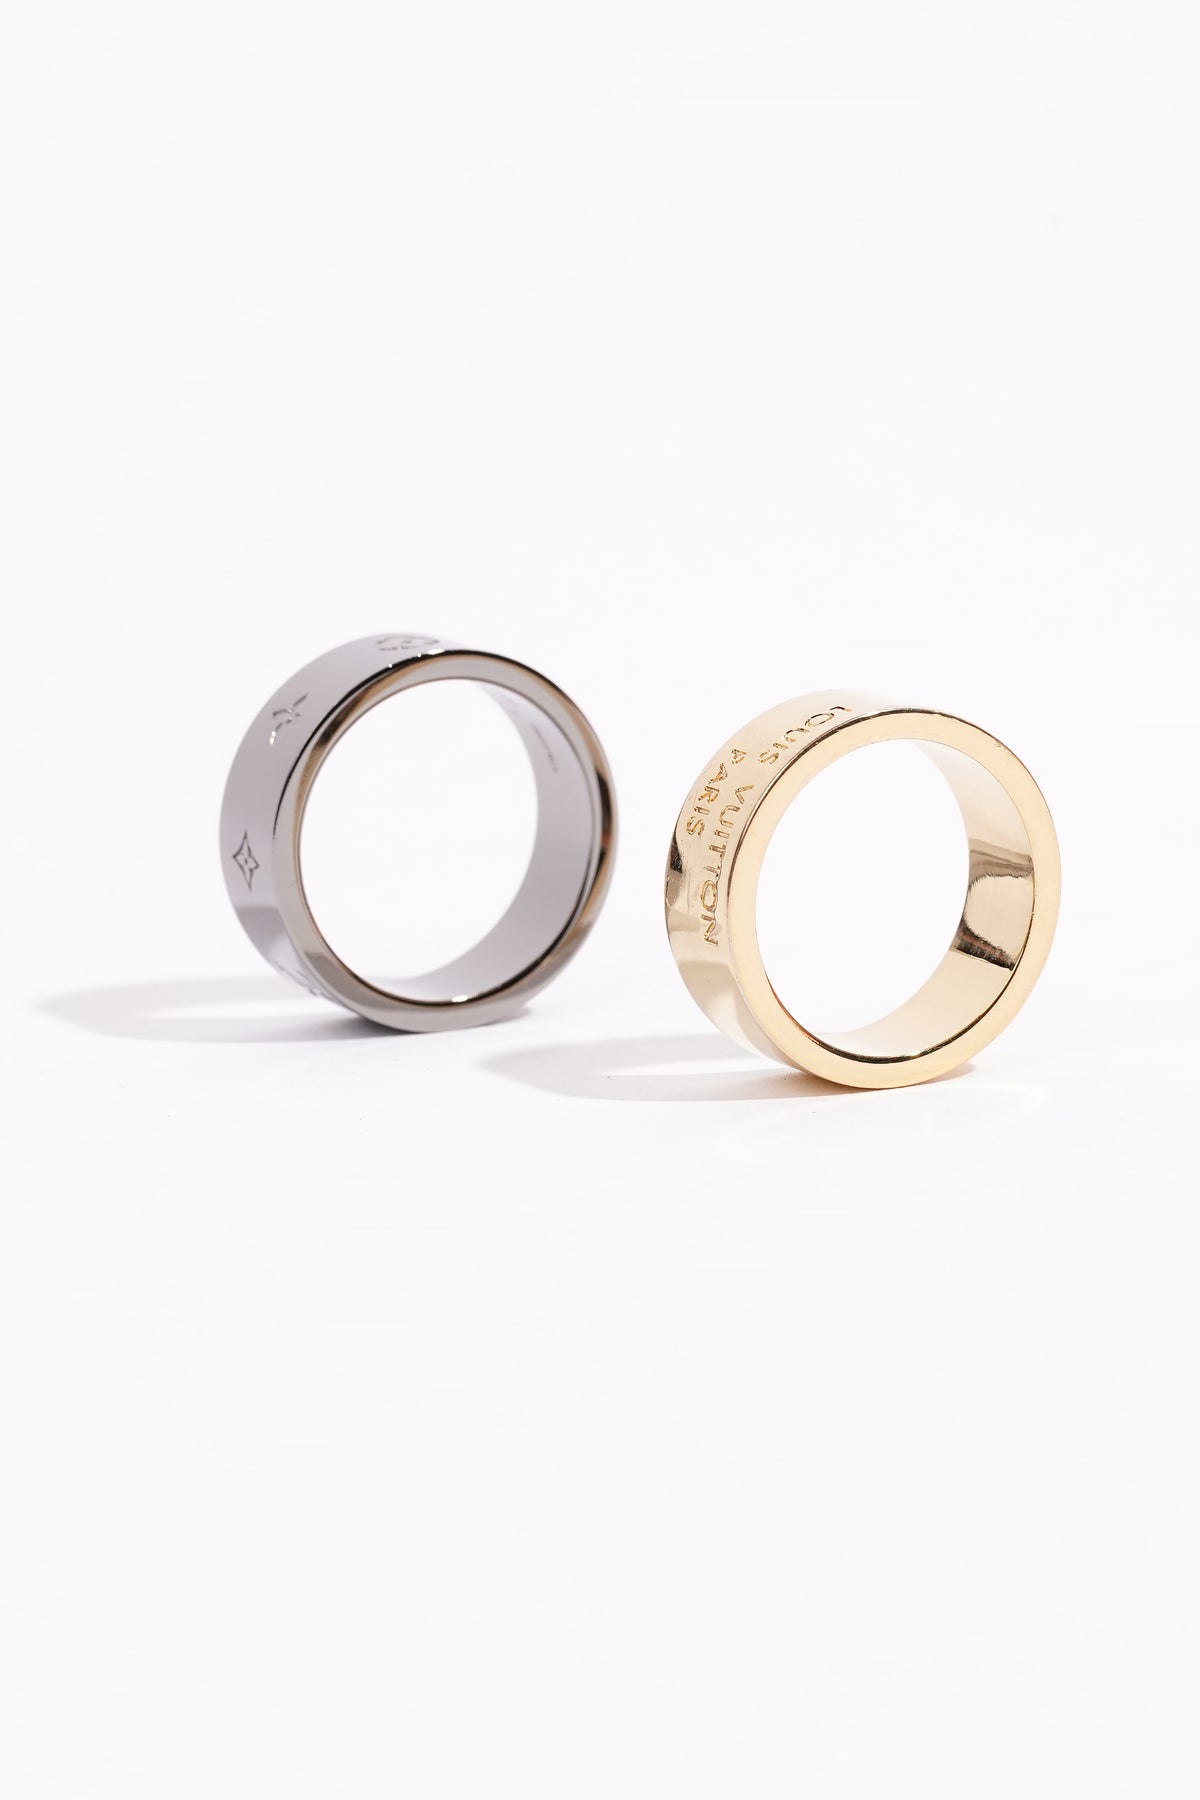 Shop Louis Vuitton Lv Instinct Set Of 2 Rings by KICKSSTORE